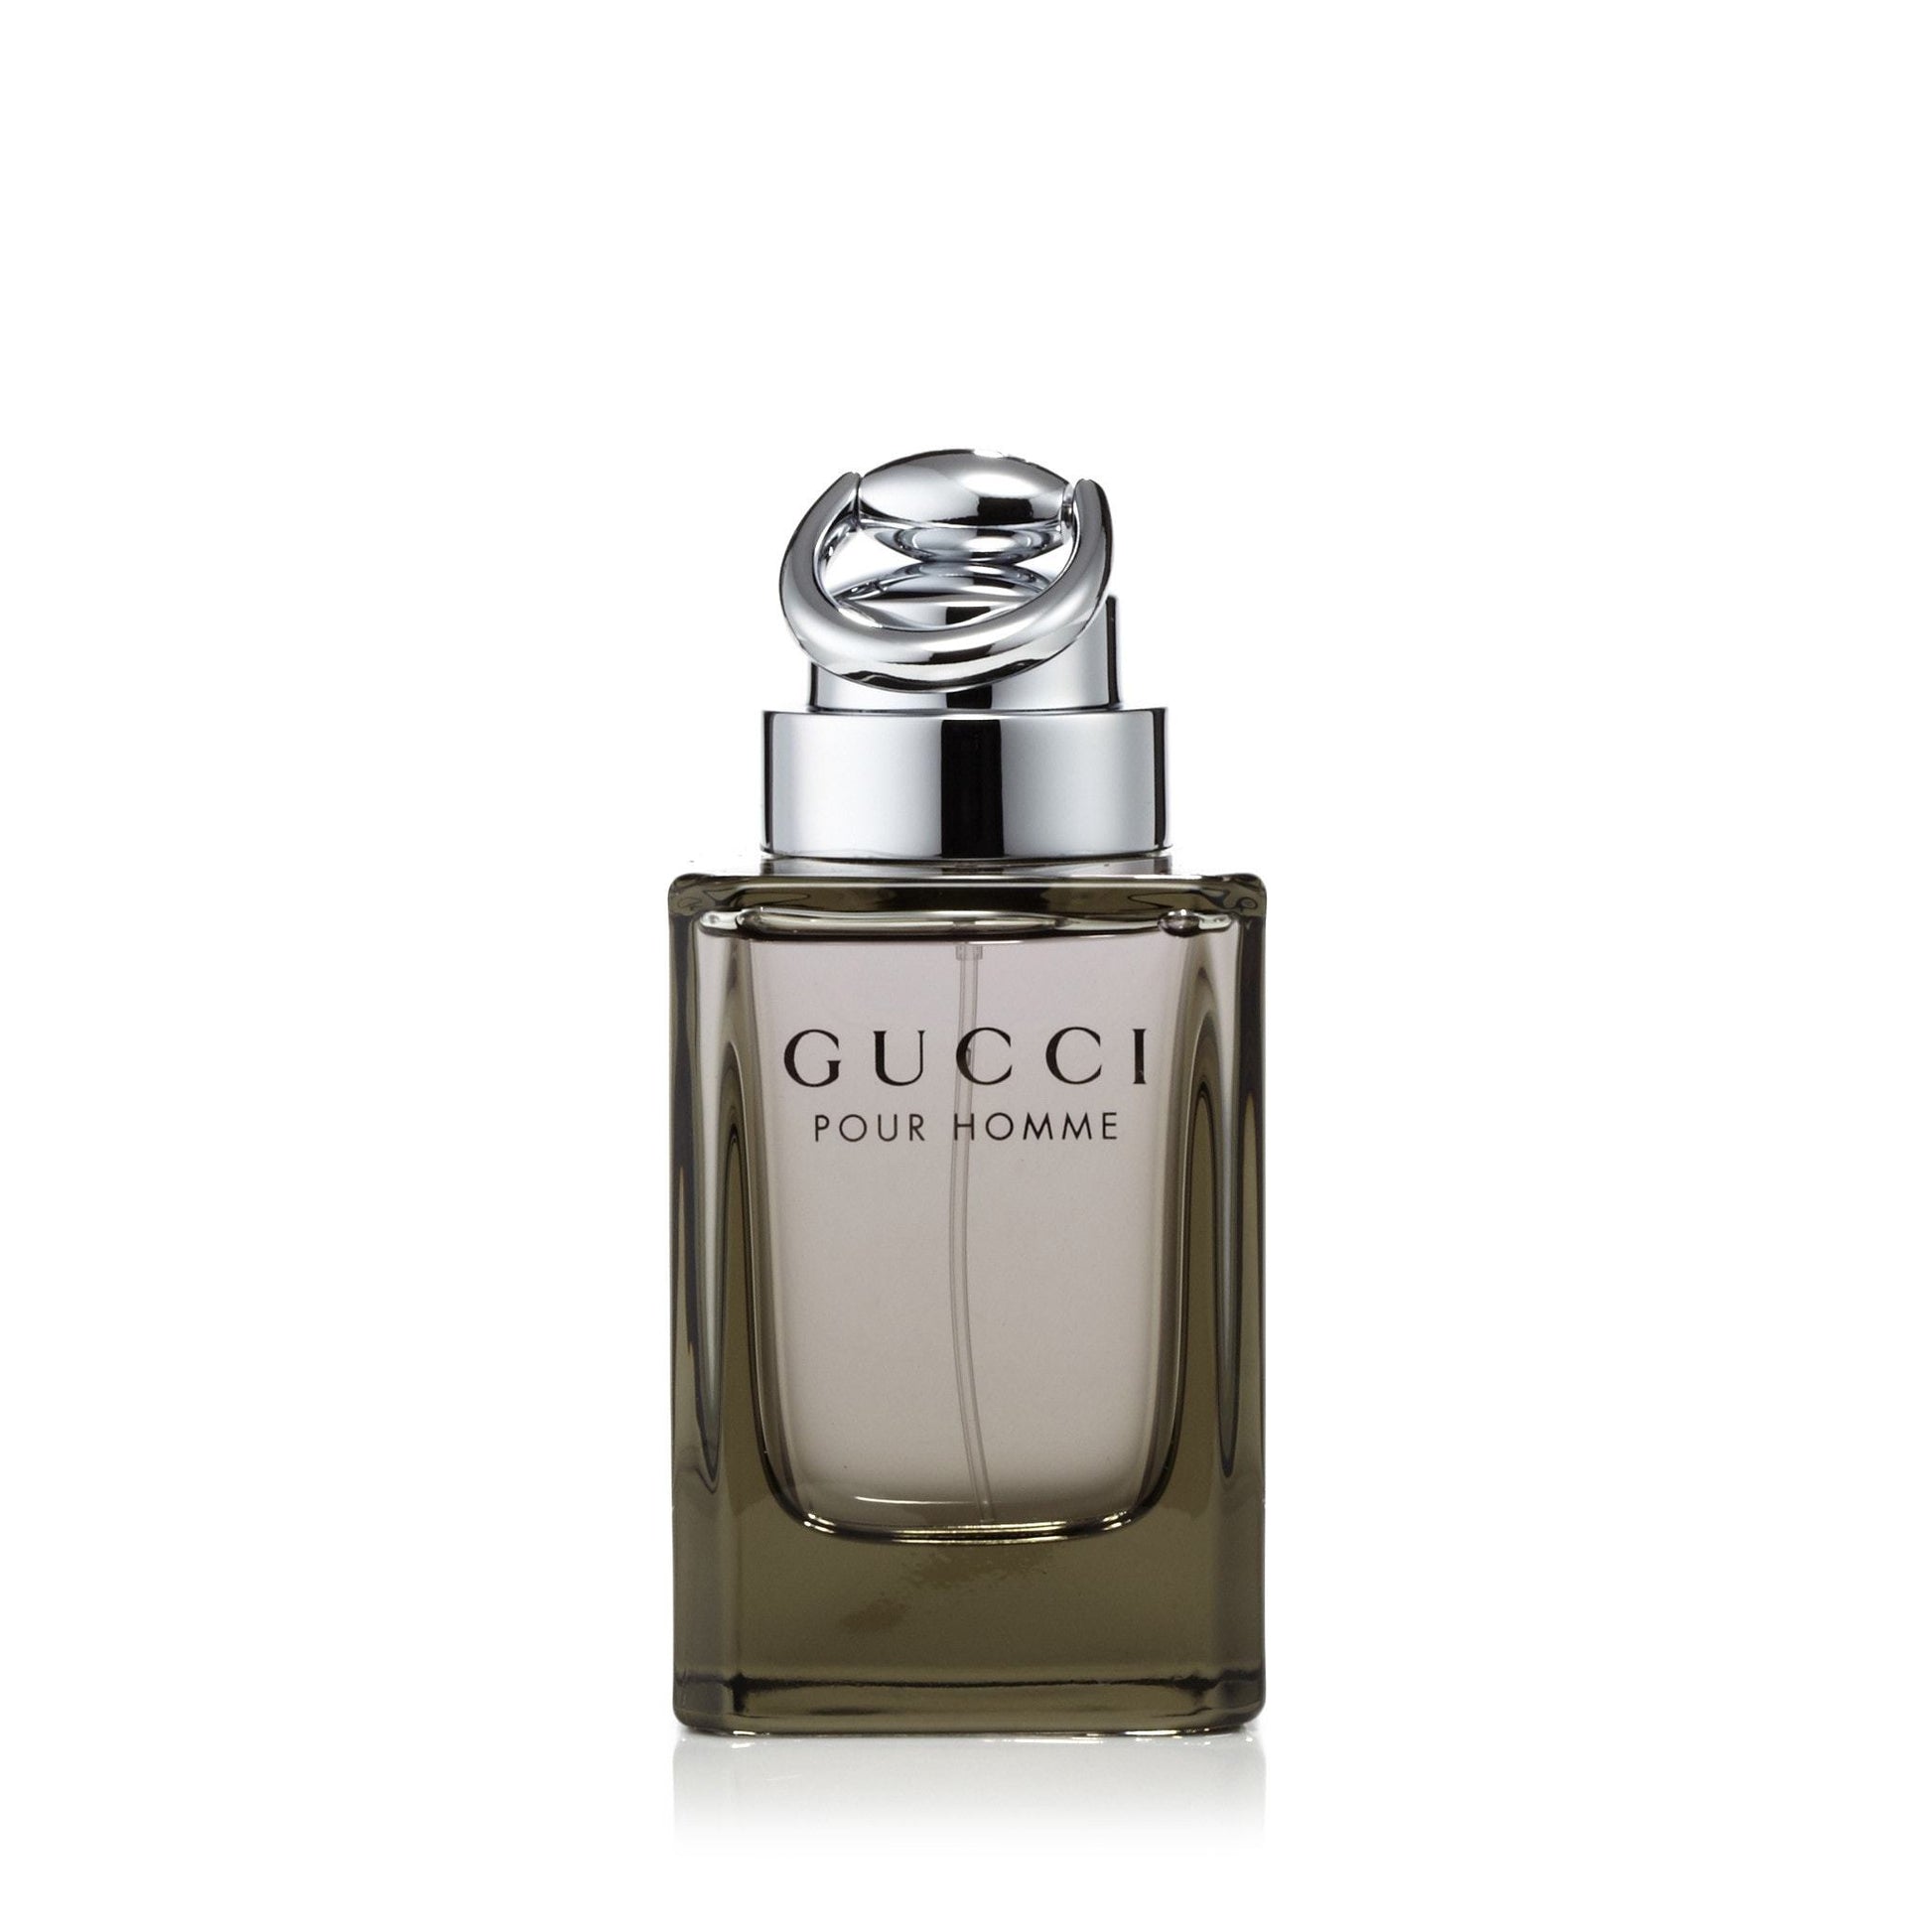 Gucci by Gucci Eau de Toilette Spray for Men by Gucci, Product image 1